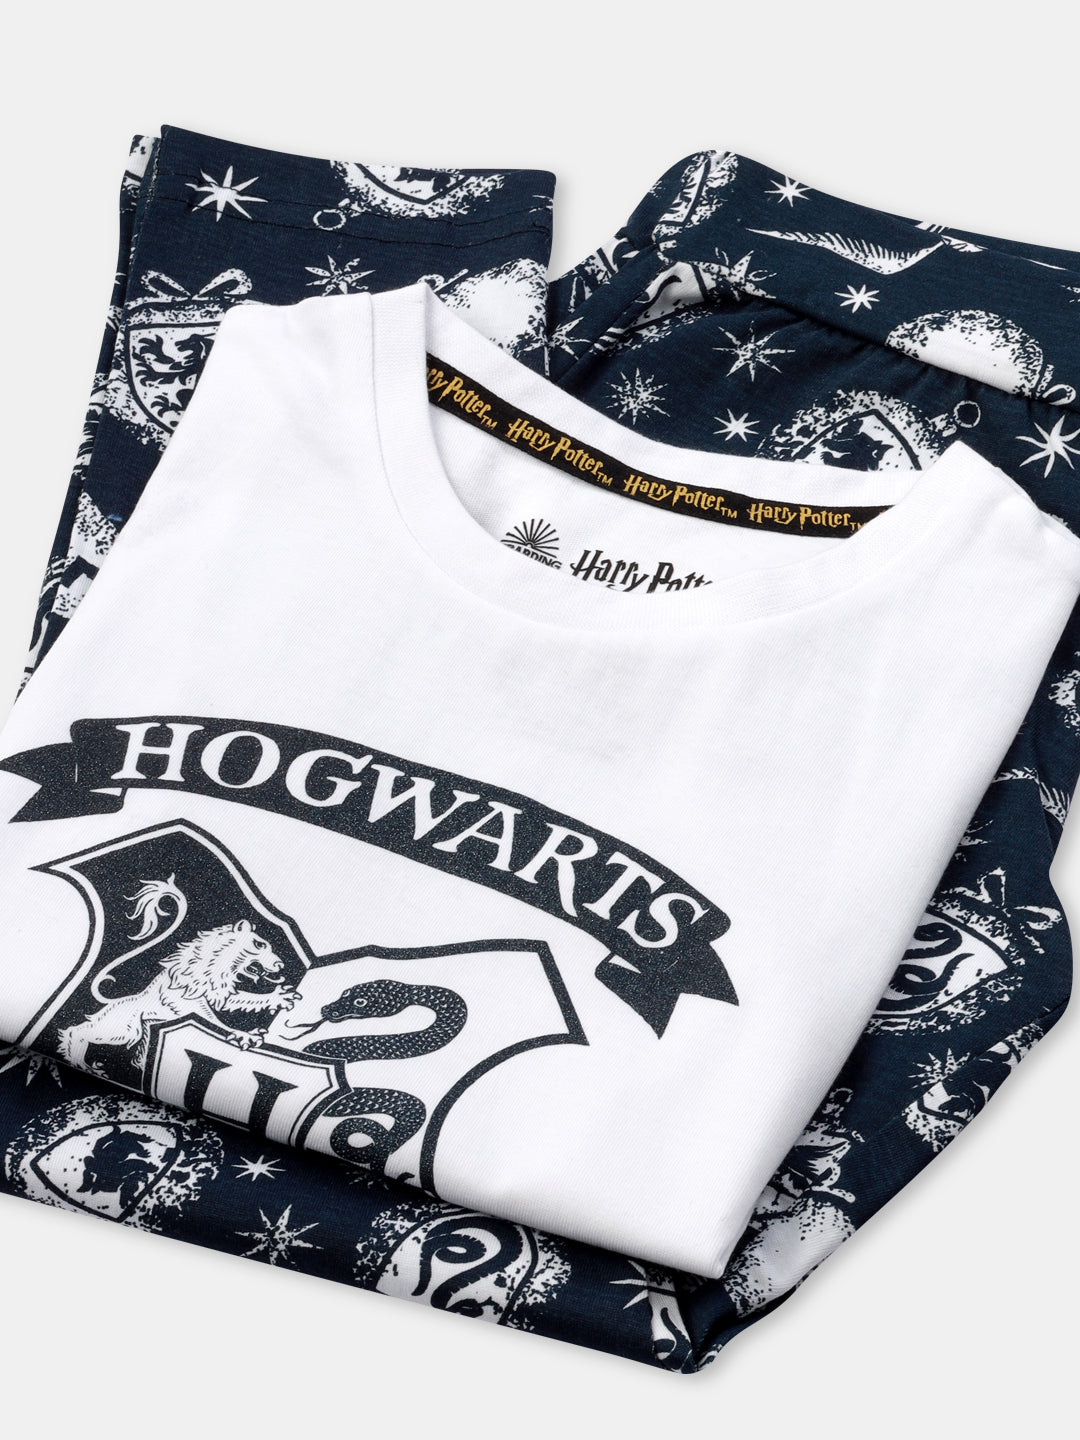 harry potter hogwarts logo pajama set nap chief 100% organic cotten